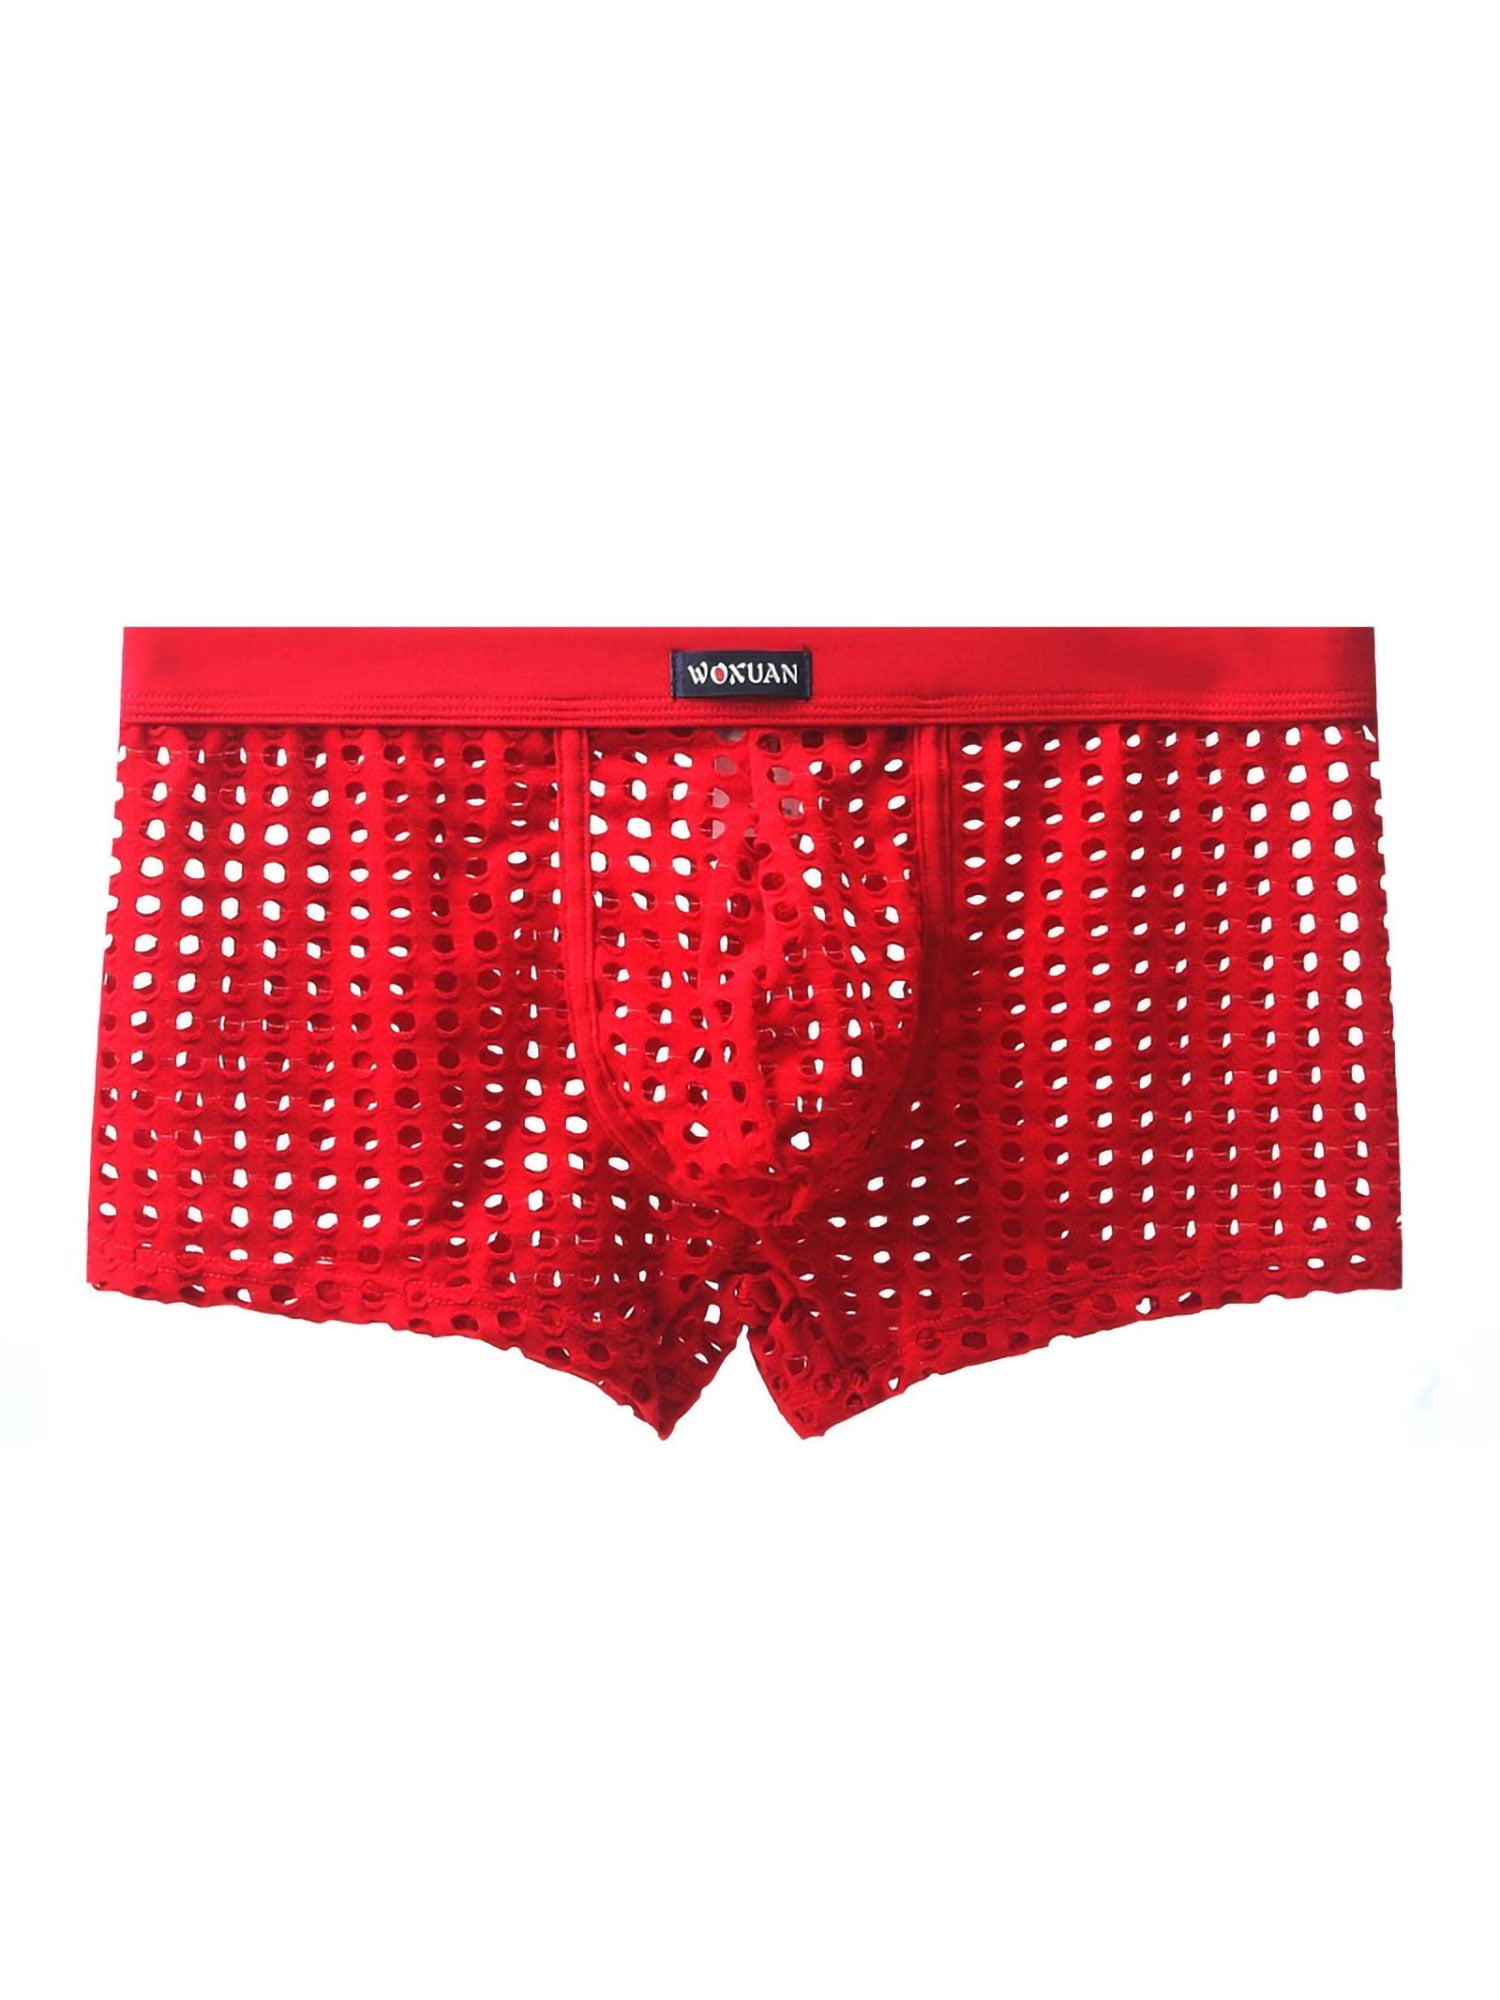 Mens Fishnet Underwear Sheer Mesh Open Butt Jockstrap Bikini Briefs Bulge Pouch